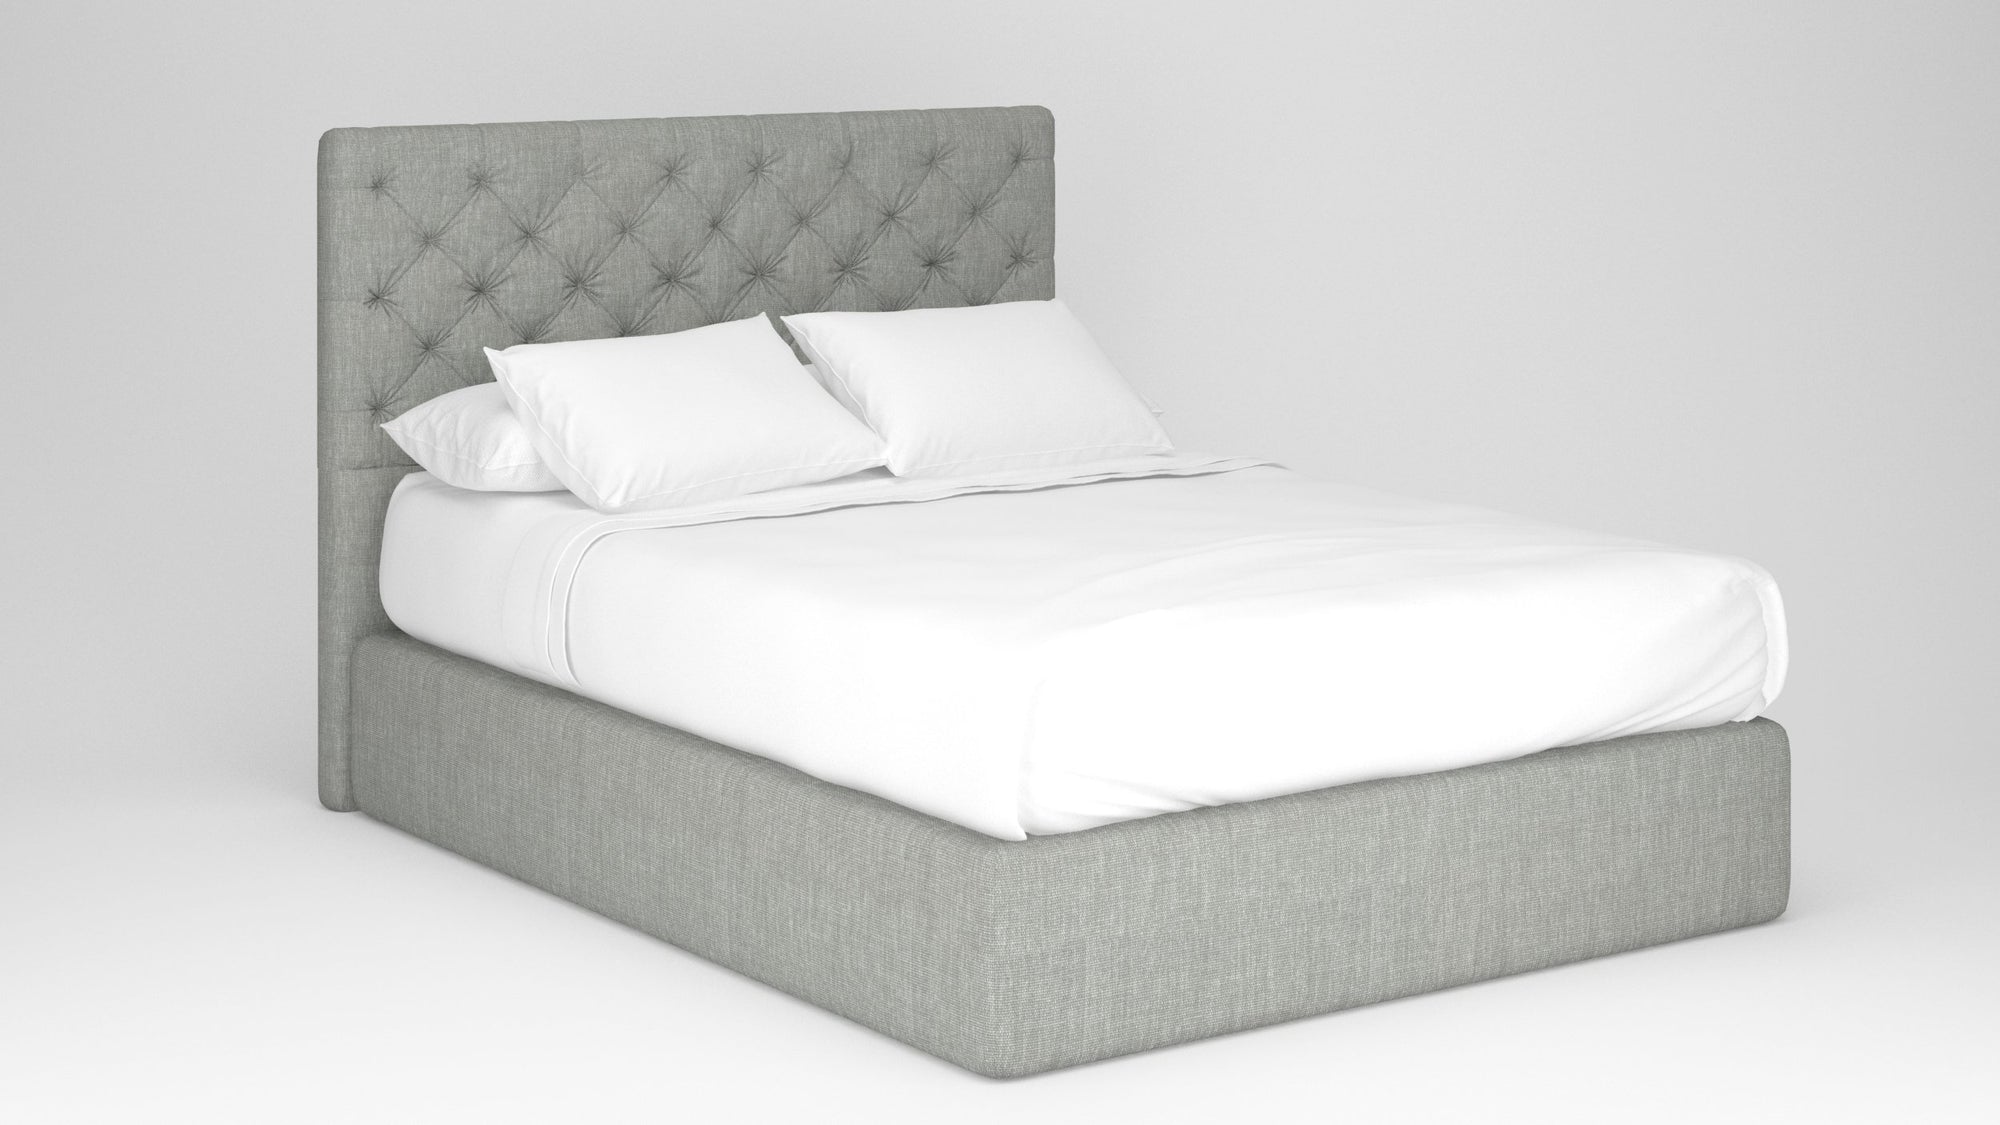 Astor Bed